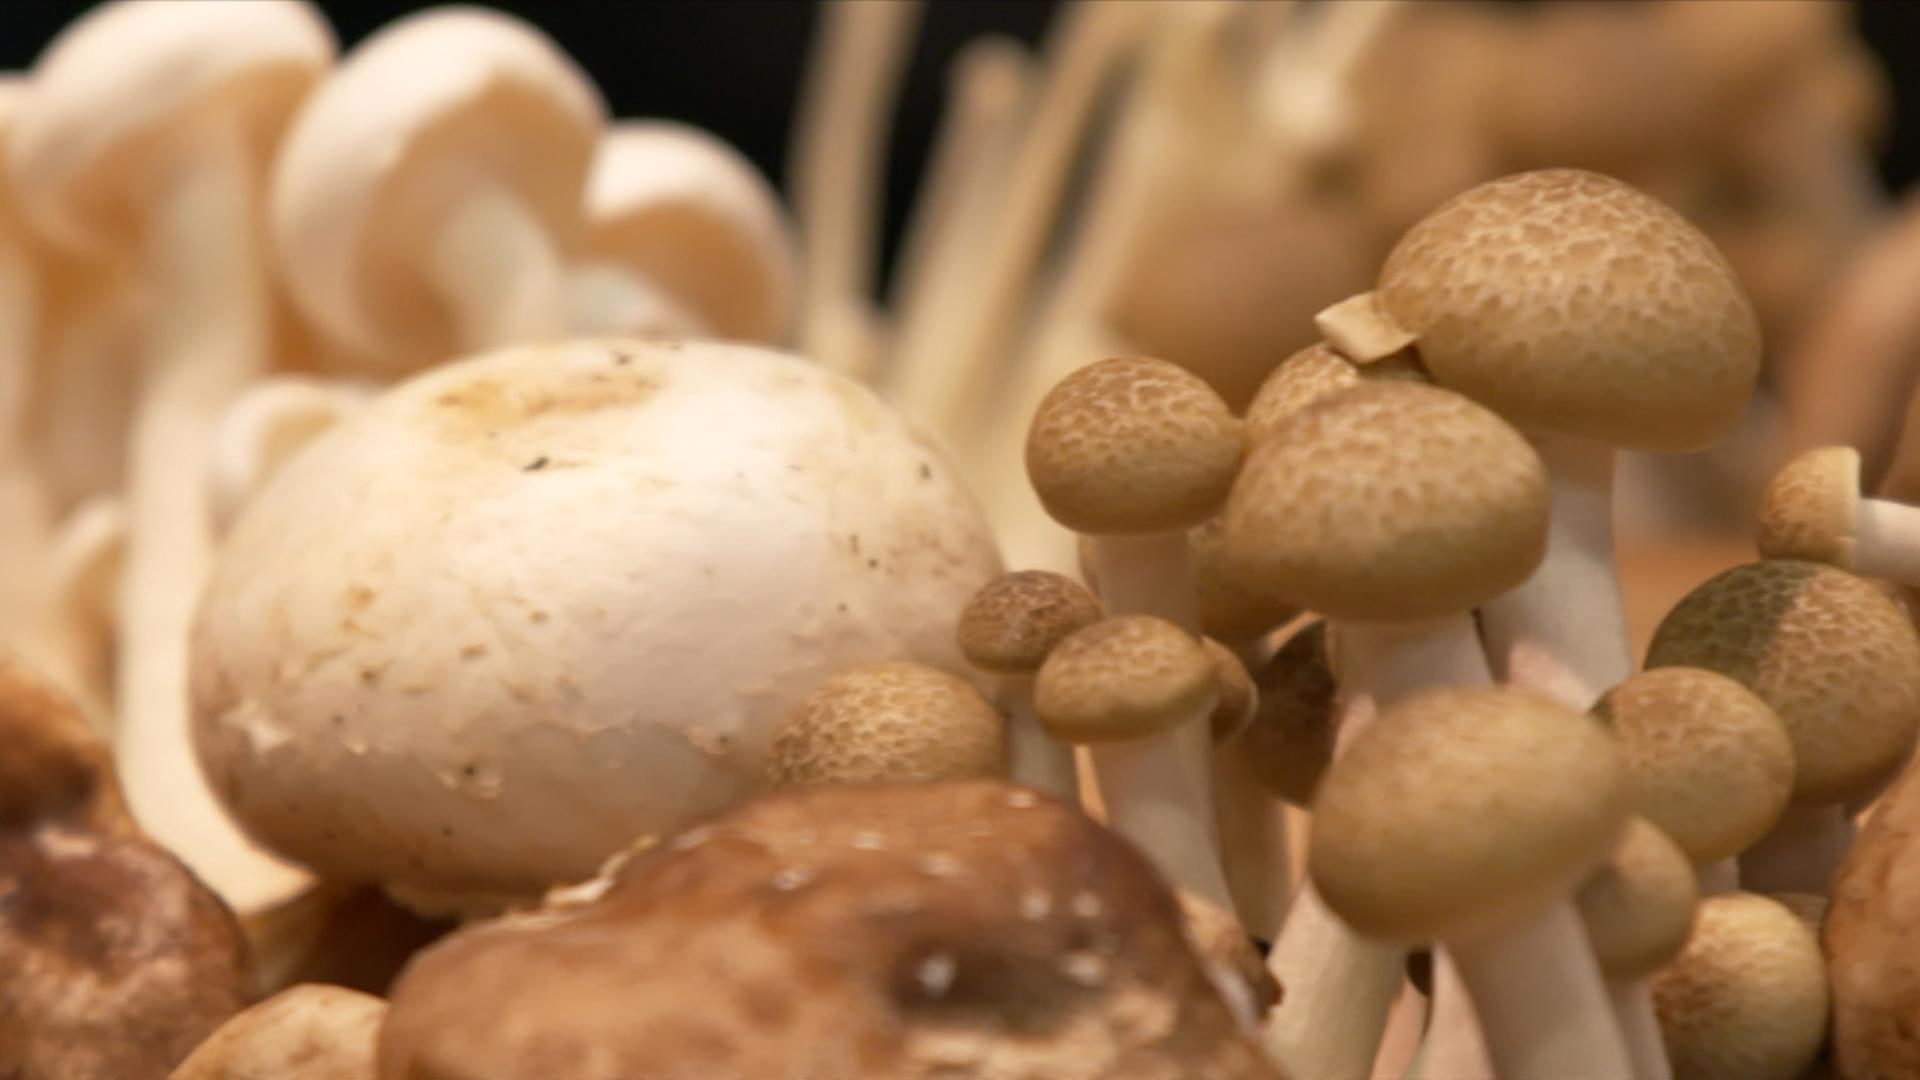 moma future: Pilze als Fleischersatz